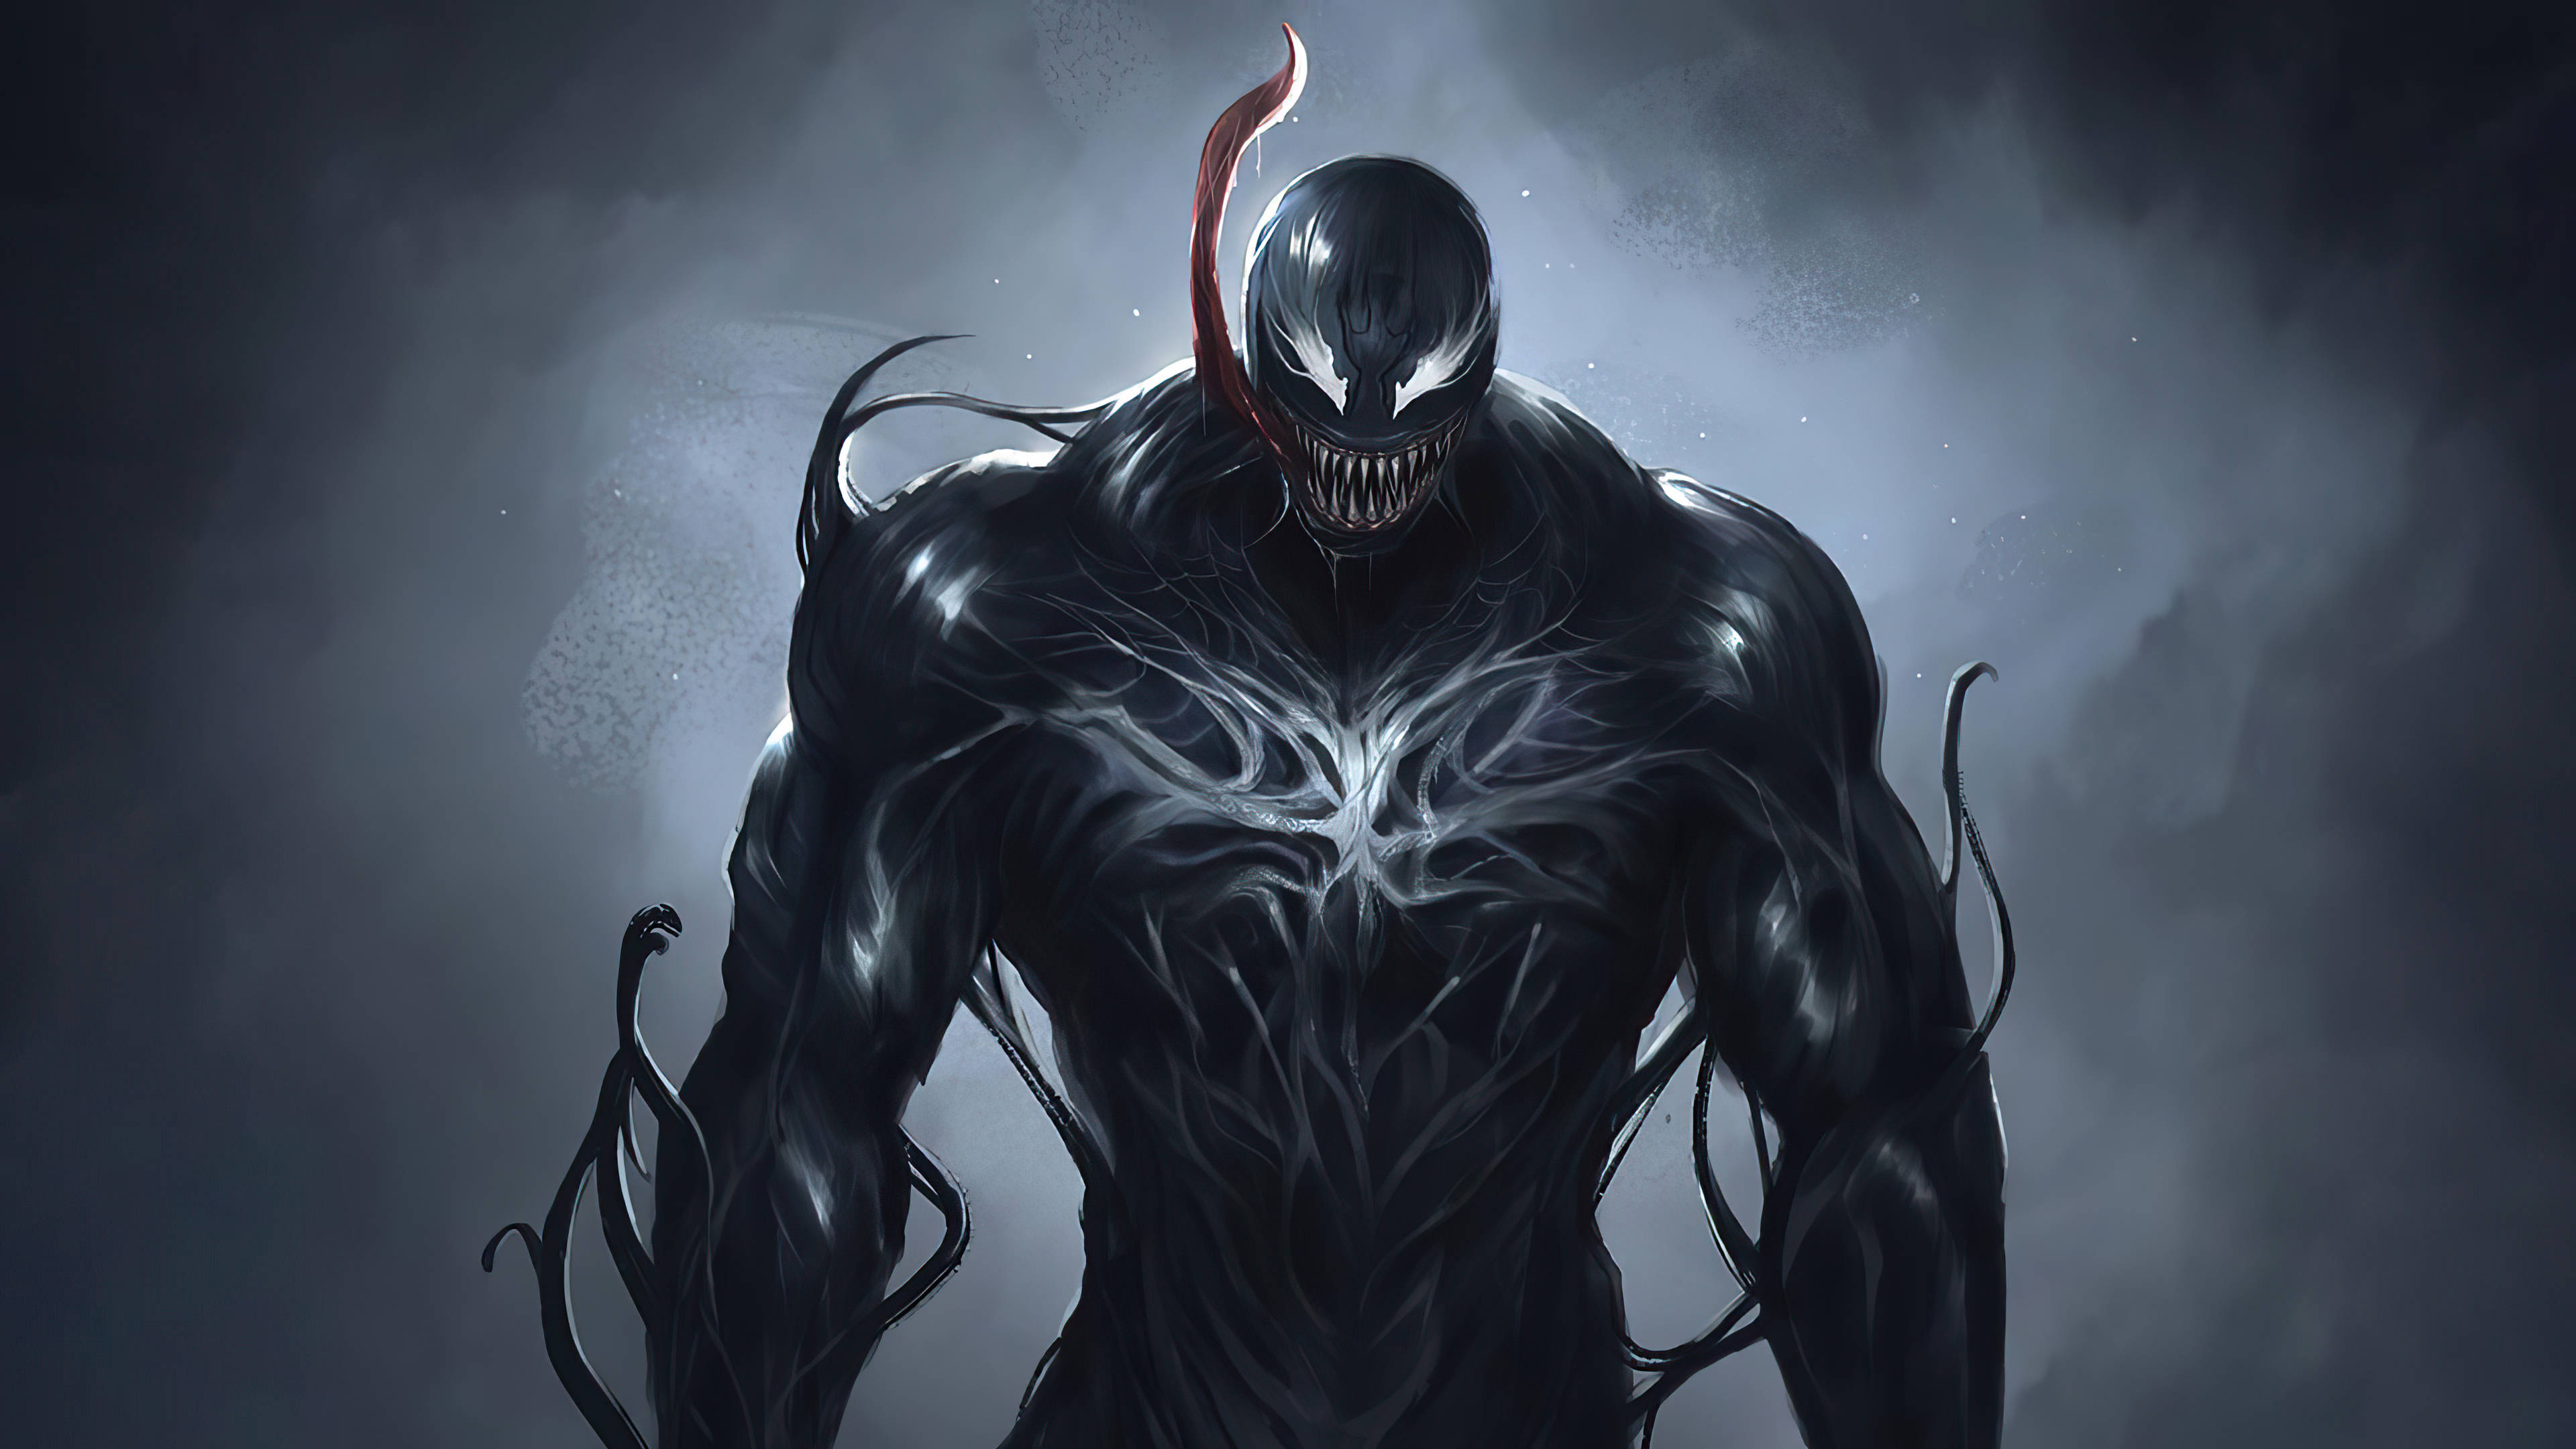 Free Anti Venom Wallpaper Downloads 100 Anti Venom Wallpapers for FREE   Wallpaperscom